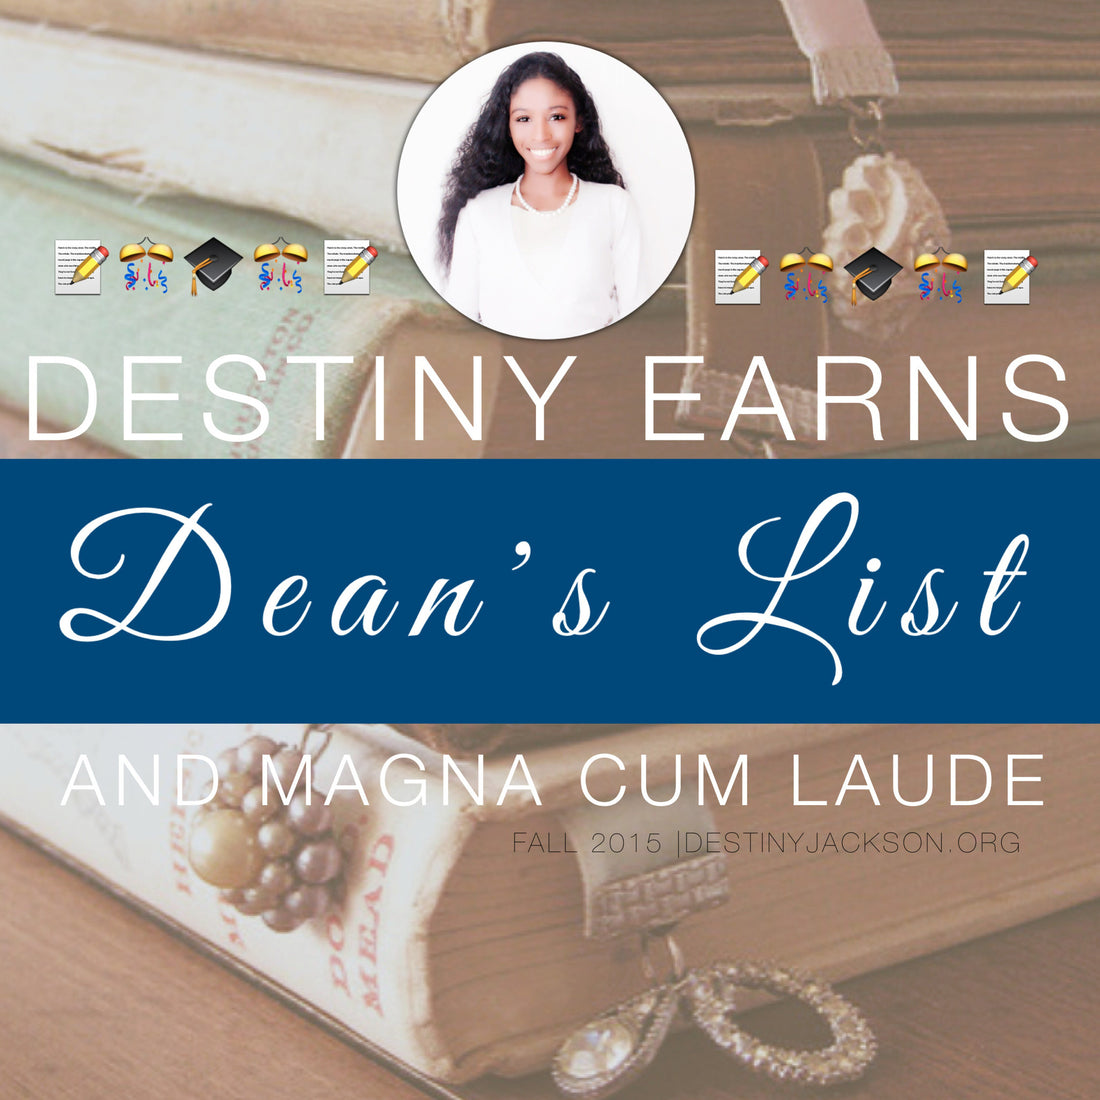 Fall 2015: I earned Dean's List & Magna Cum Laude!